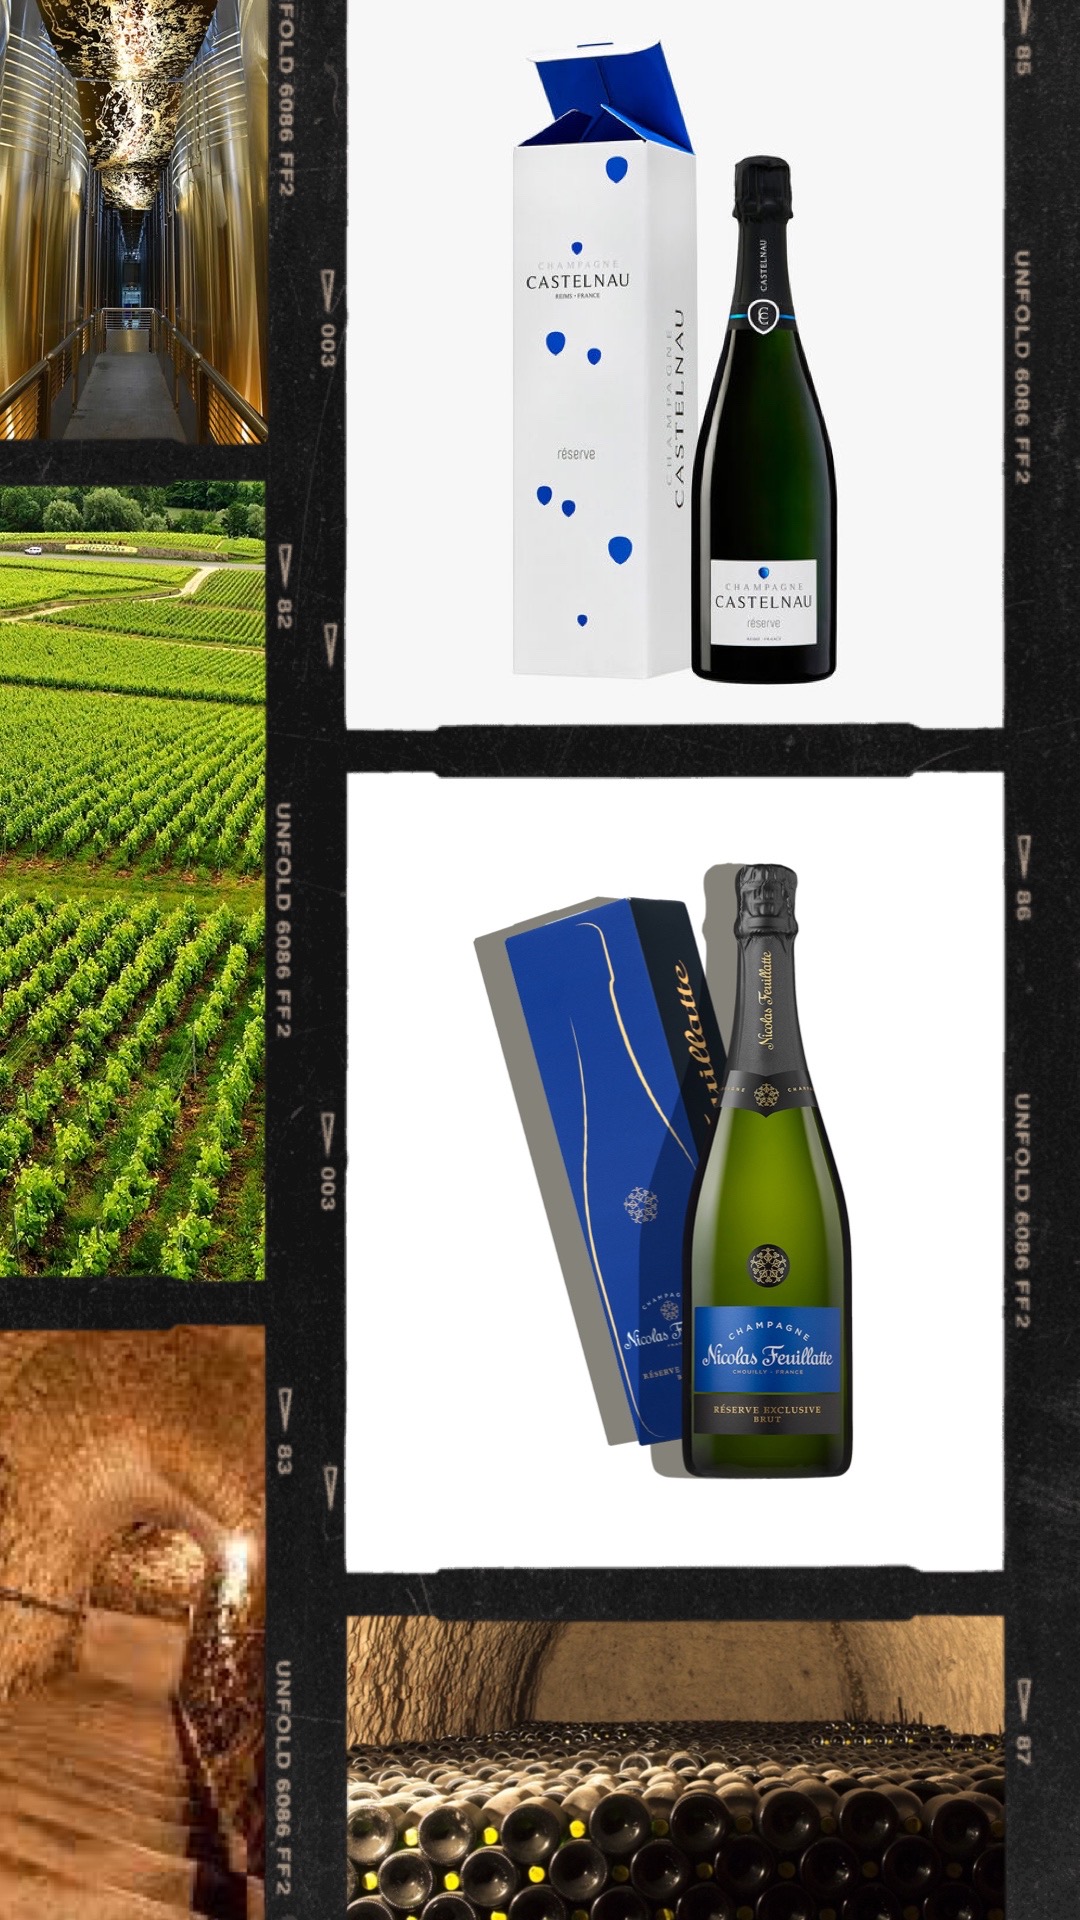 Champagne Nicolas Feuillatte and CRVC merge to form “Terroirs et Vignerons de Champagne”